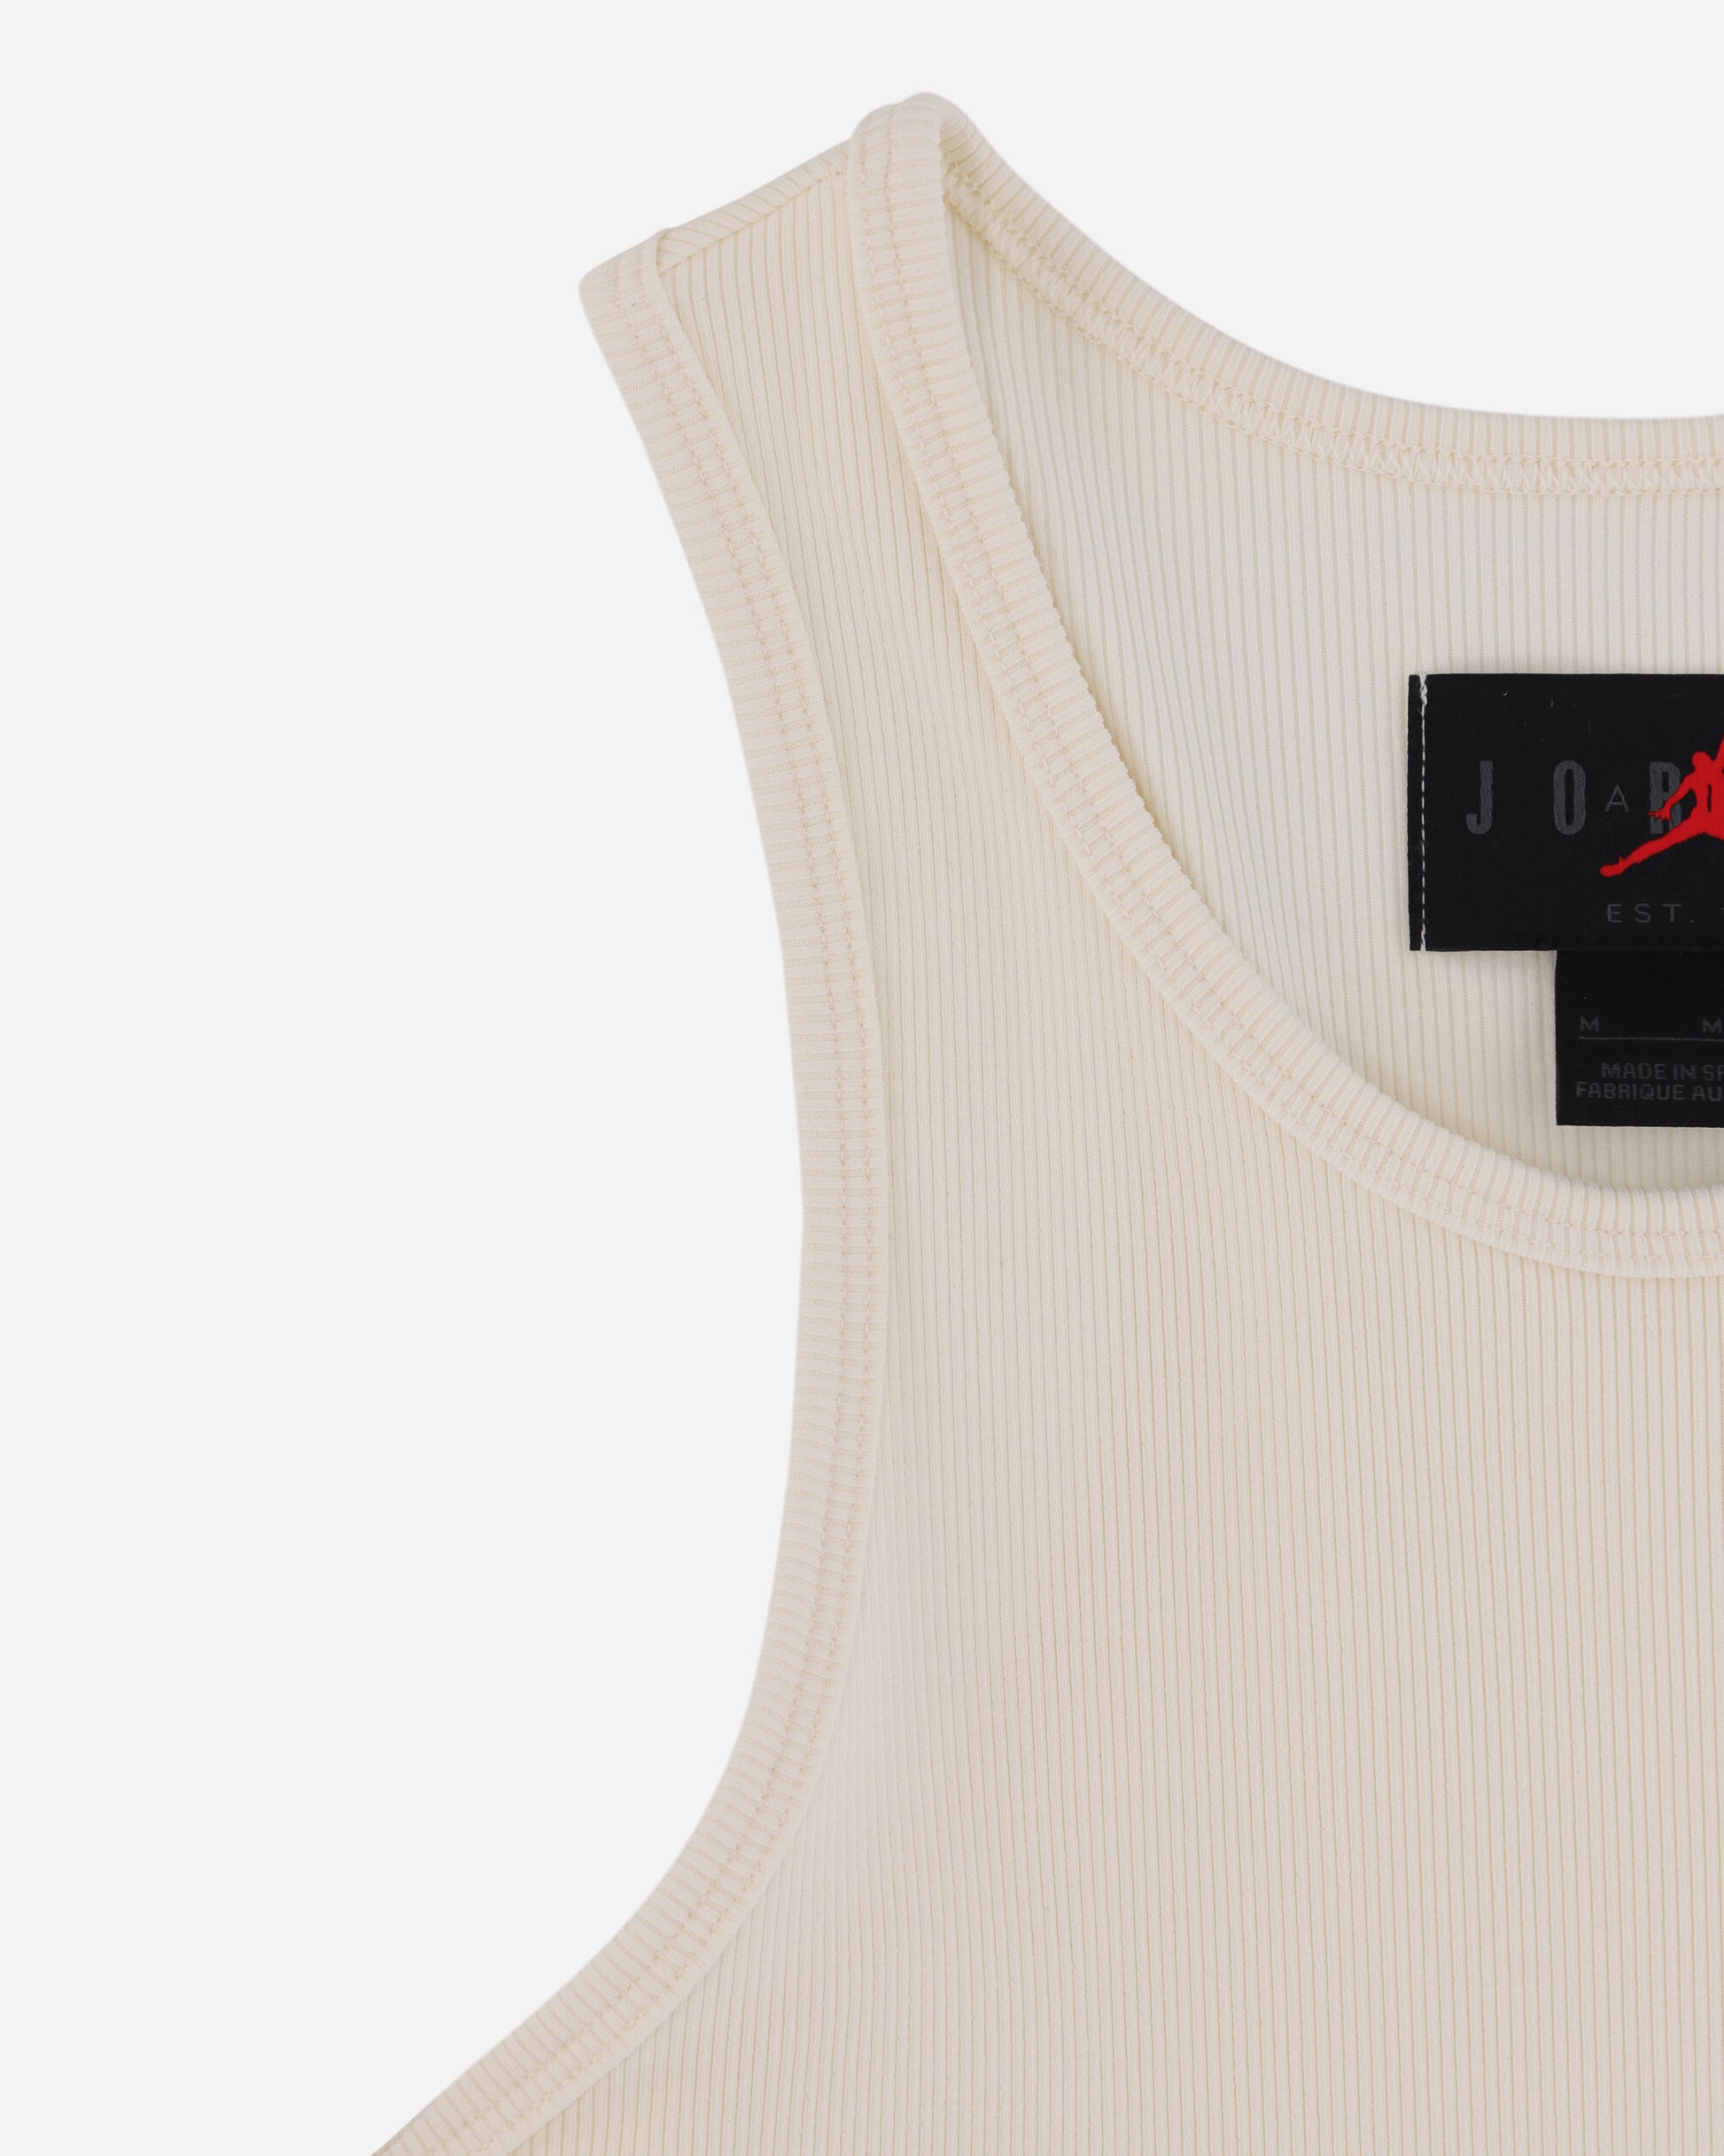 Nike Jordan Wmns Sp Tt Tank Coconut Milk/Gym Red T-Shirts Shortsleeve FB2629-113